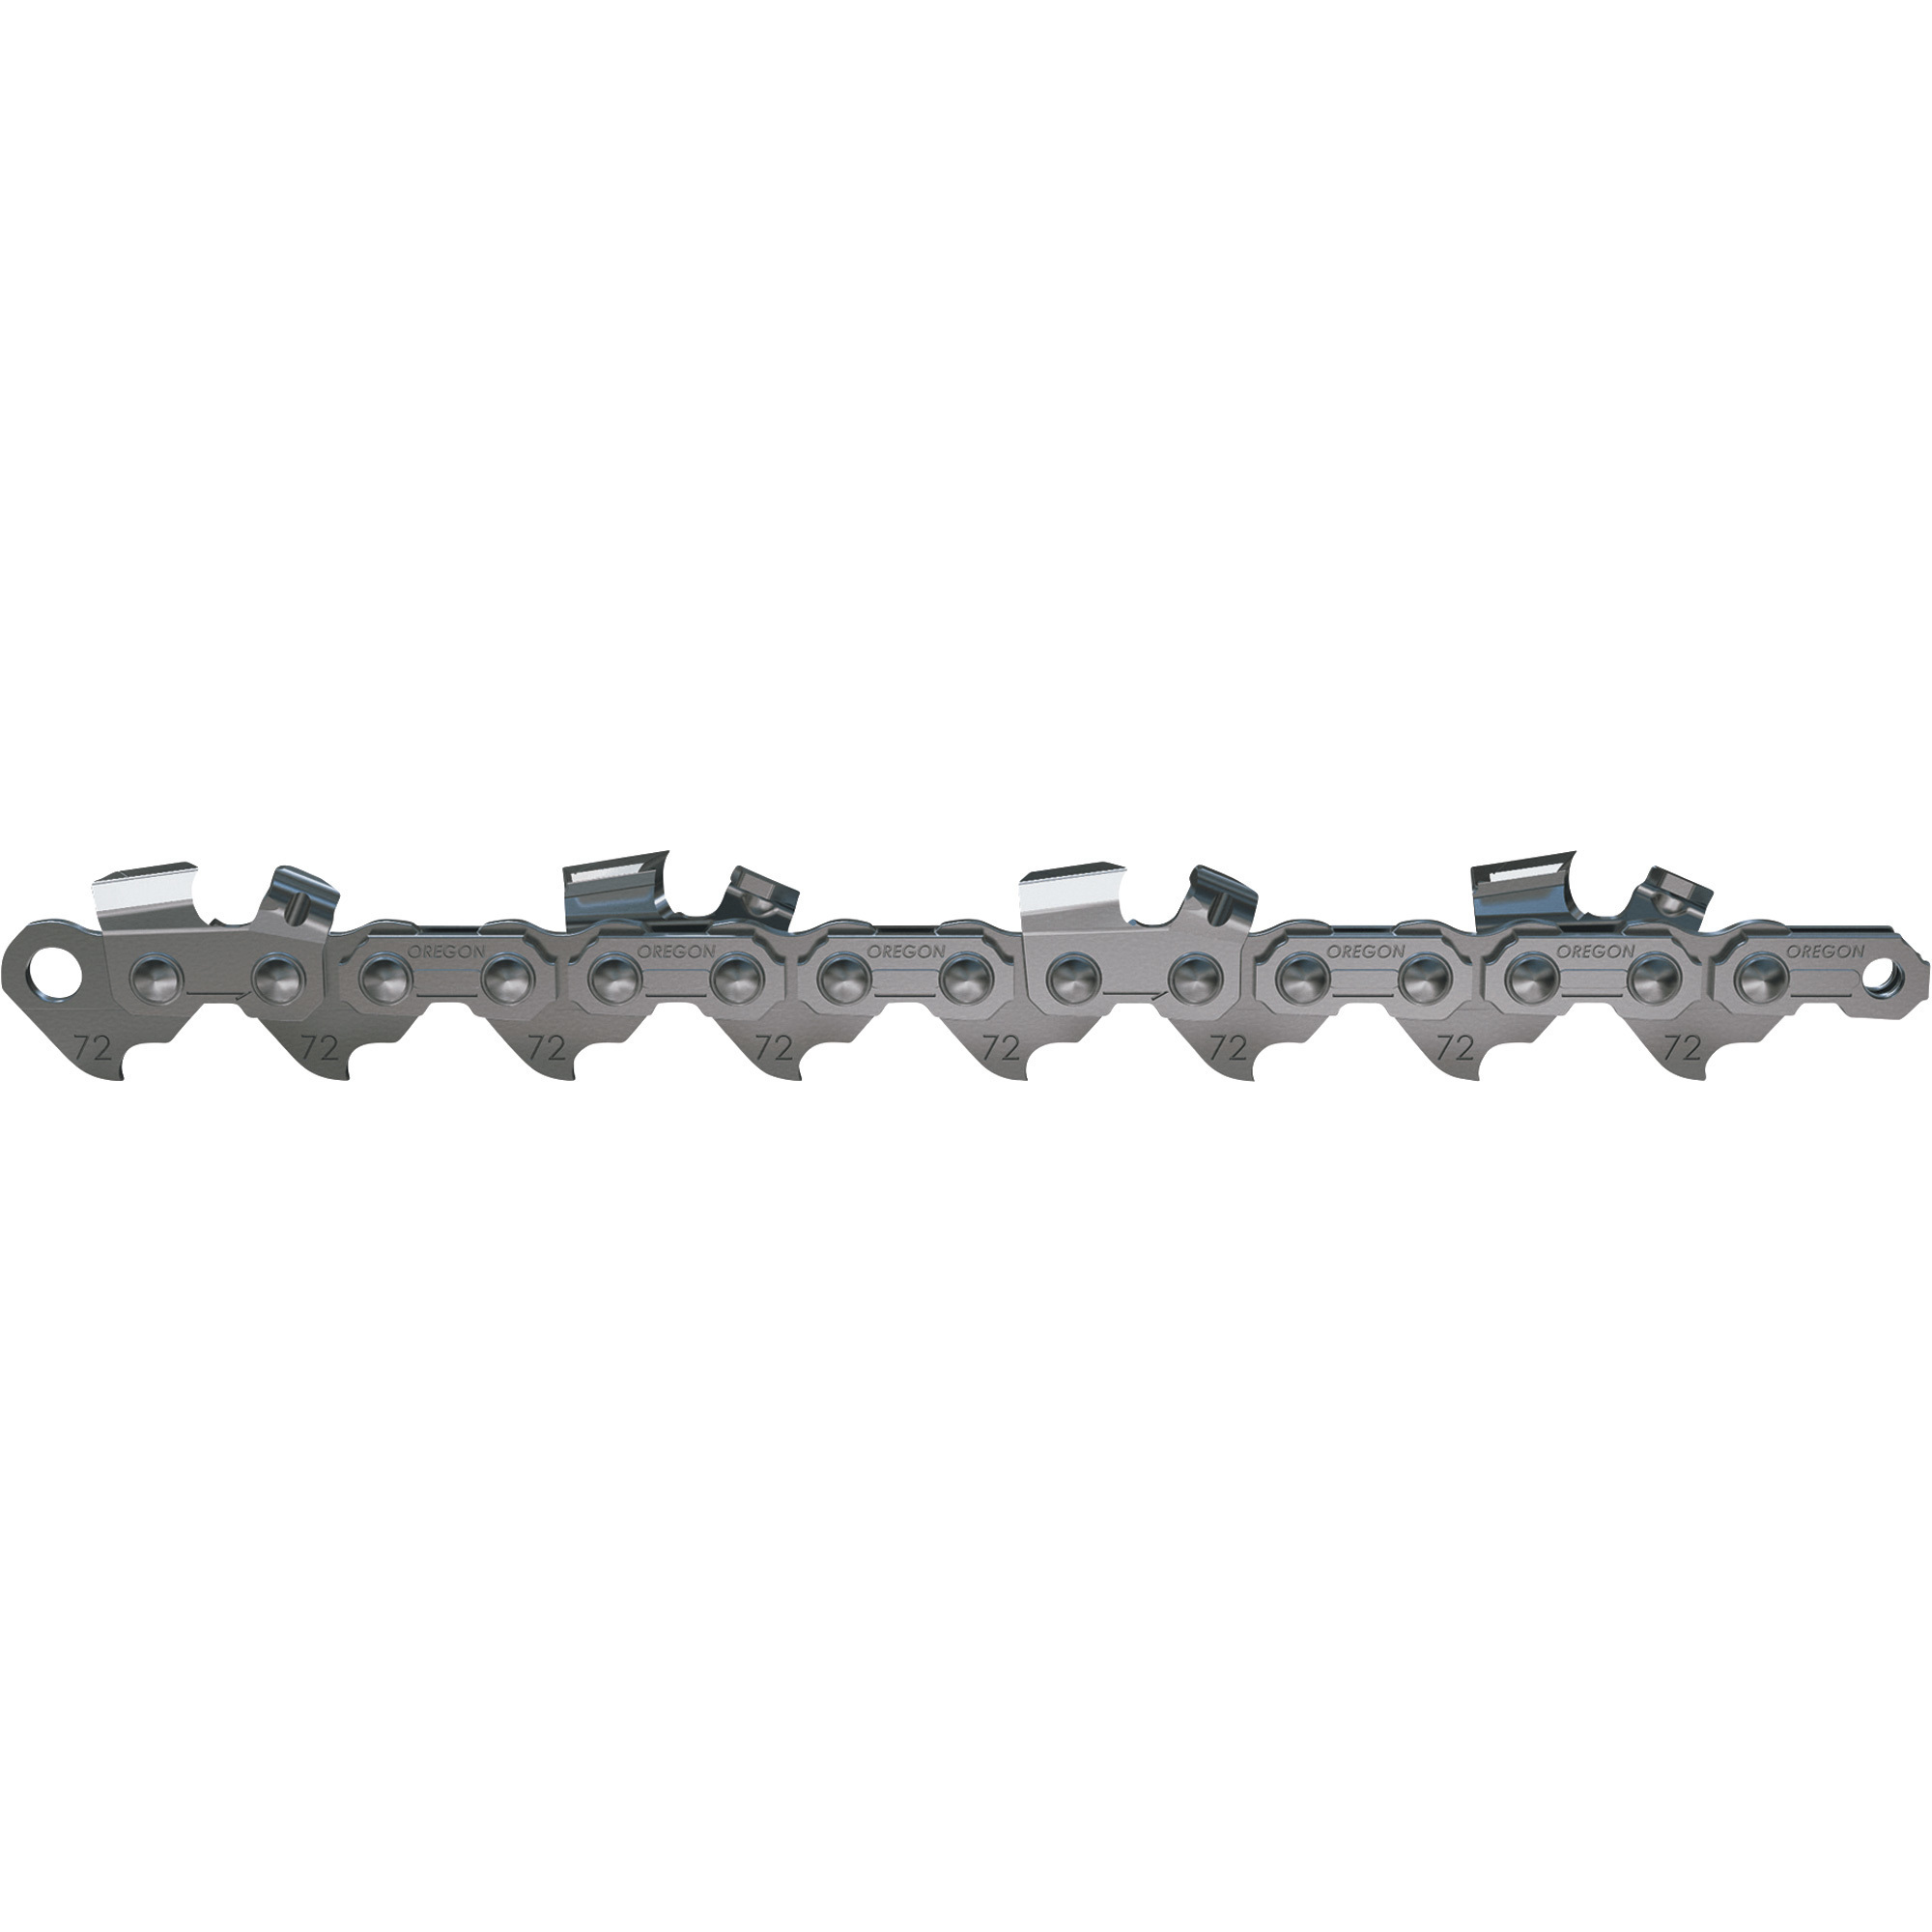 Oregon Low Kickback Chainsaw Chain, 3/8Inch x 0.050Inch, Fits 20Inch Bar, Model D70/72V070G